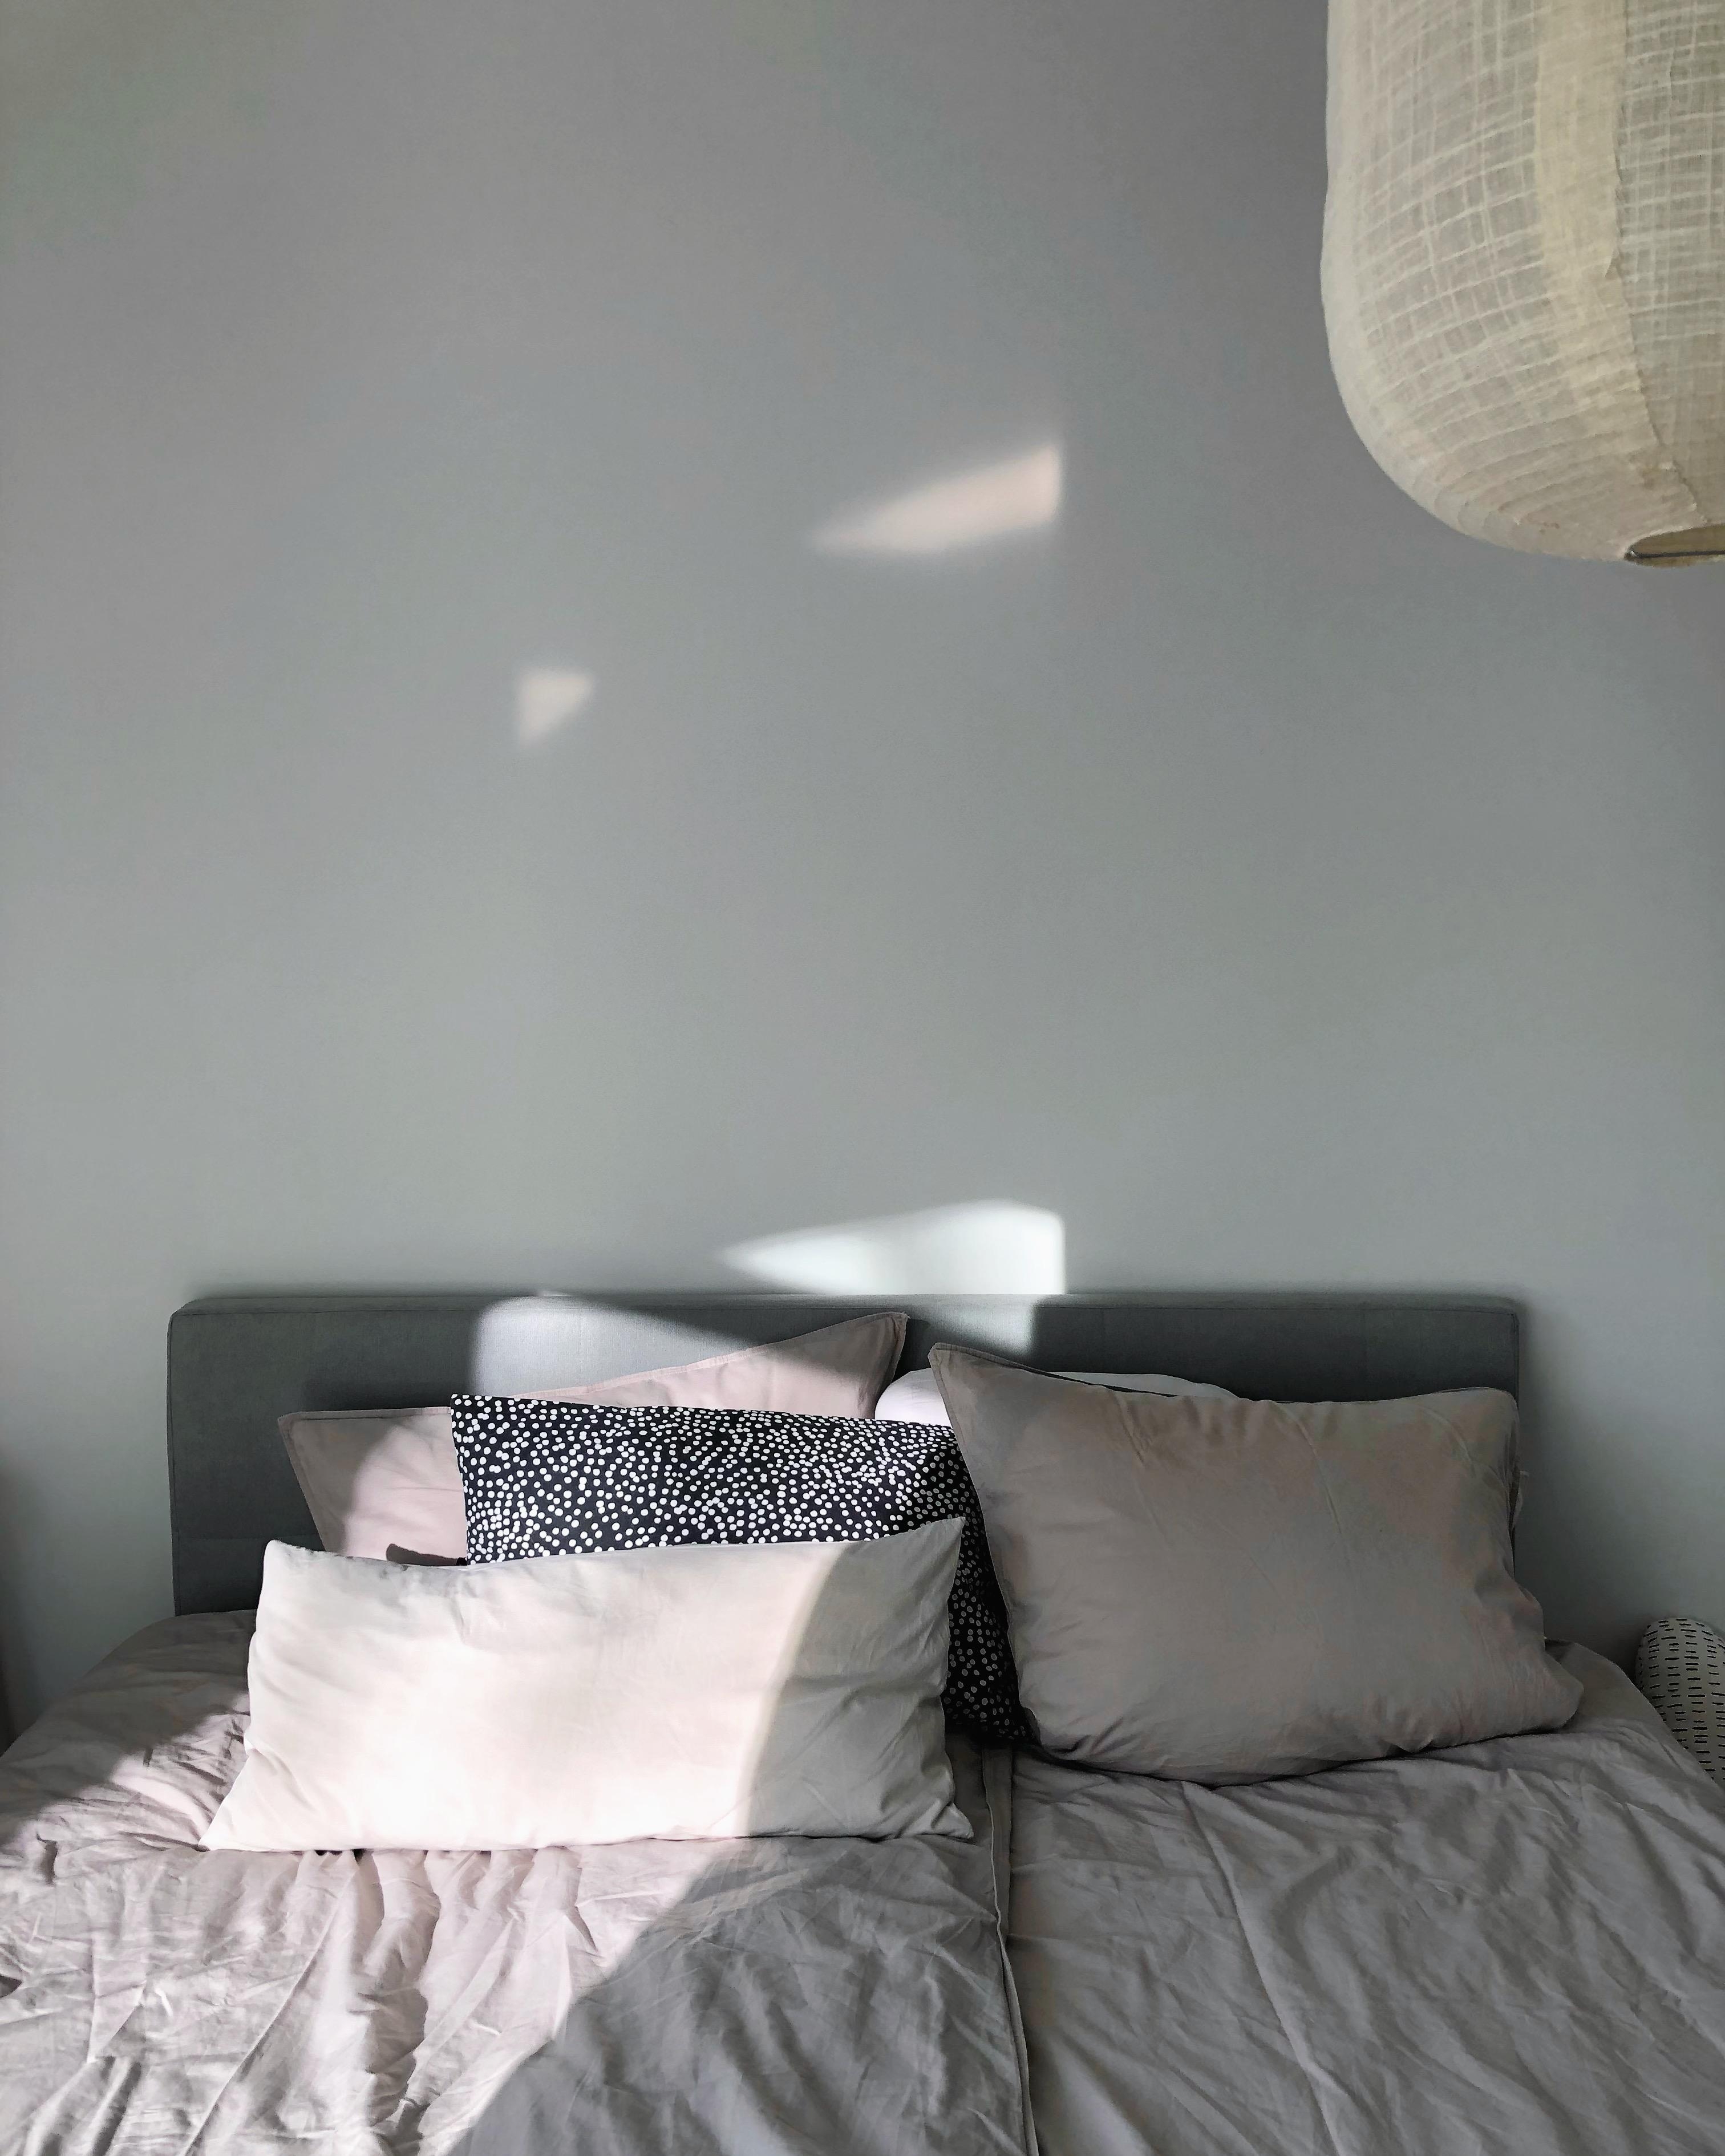 #bed #bett #bedroom #schlafzimmer #light #licht #morgen #home #interior #minimalism #nordicliving #couchstyle #calm